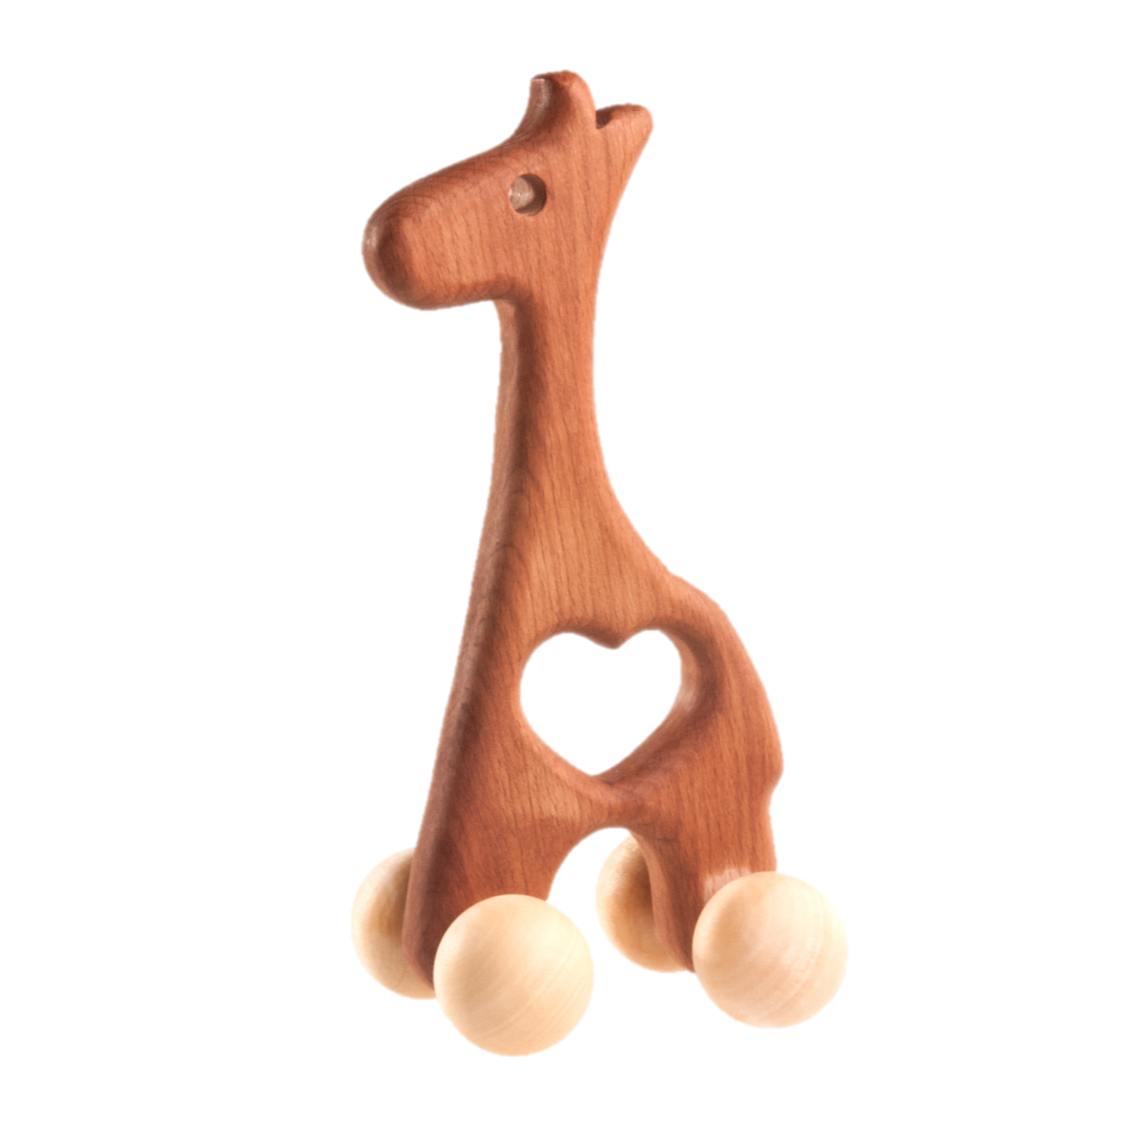 Jiggling Giraffe Thumb Push Toy - House of Marbles